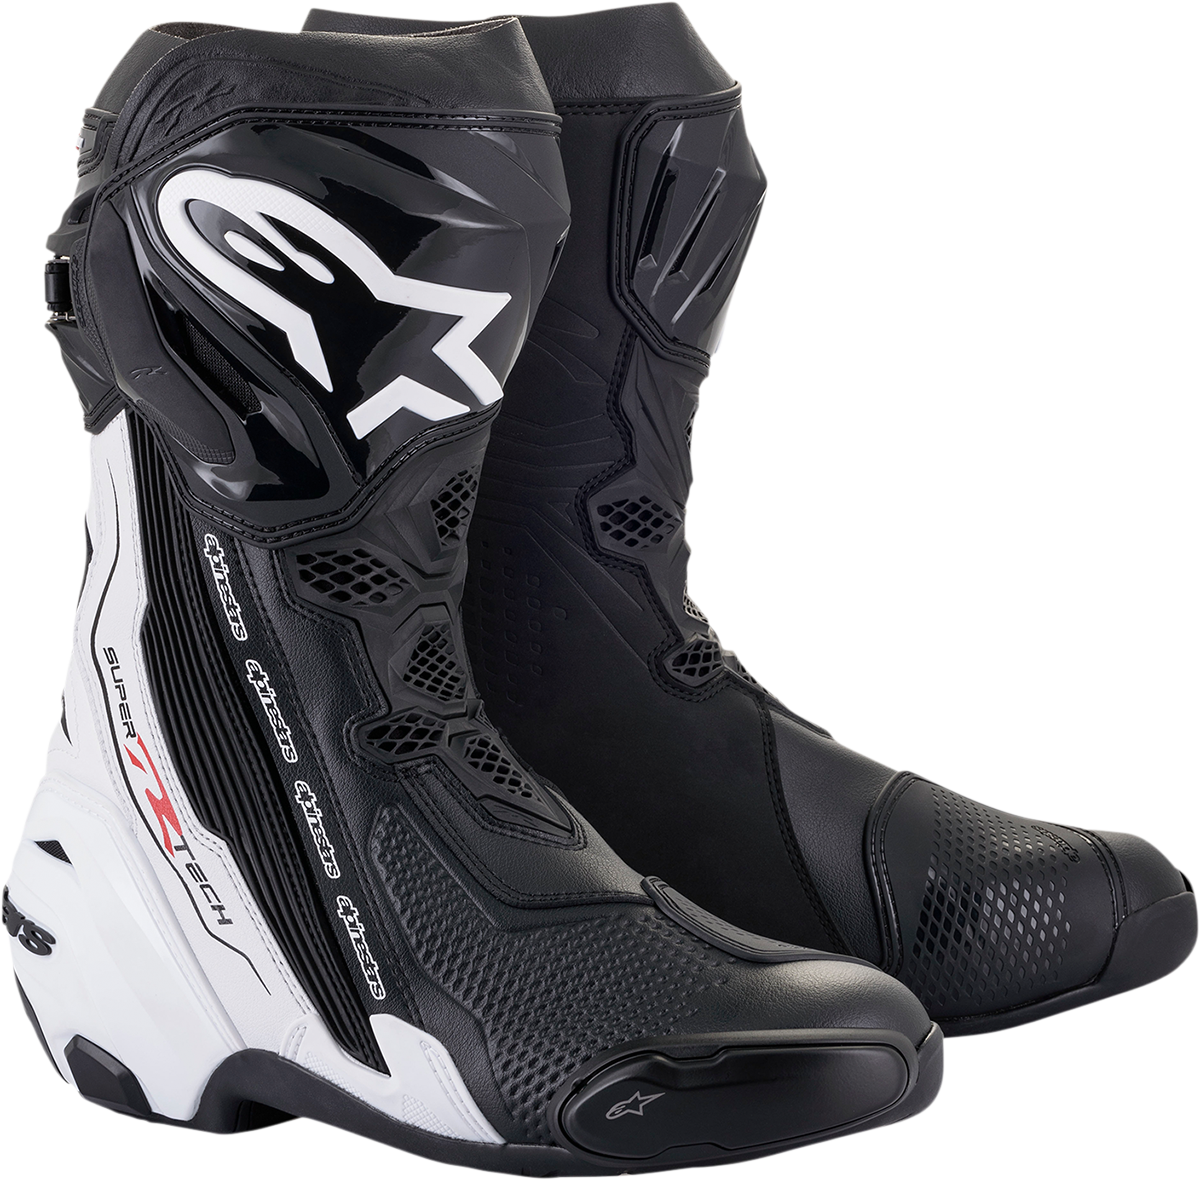 ALPINESTARS Supertech R Boots - Black/White - US 6.5 / EU 40 2220021-12-40